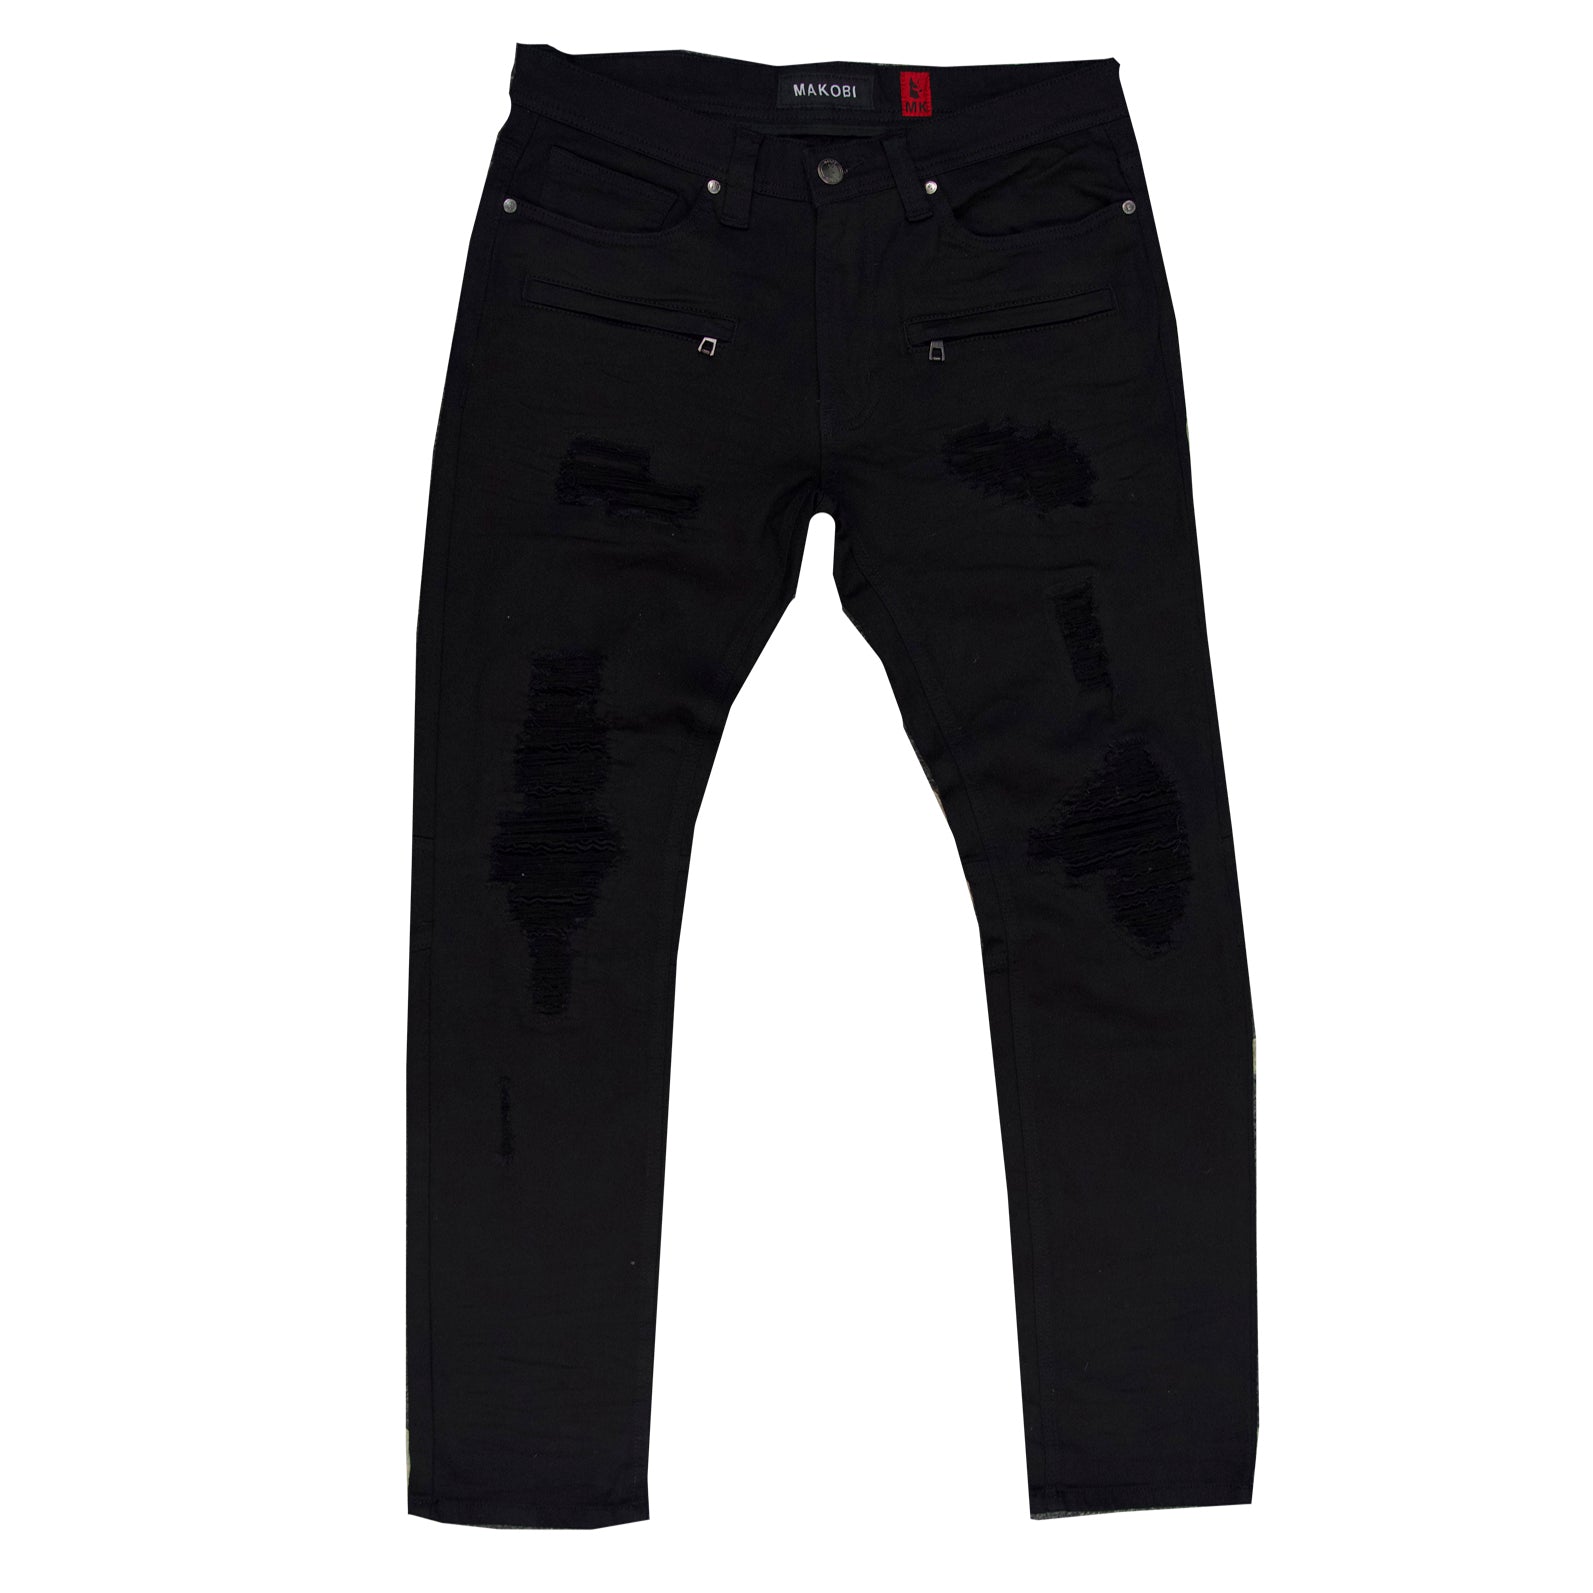 M1771 Makobi Petani Shredded Jeans With Bleach Spots - Black/Black